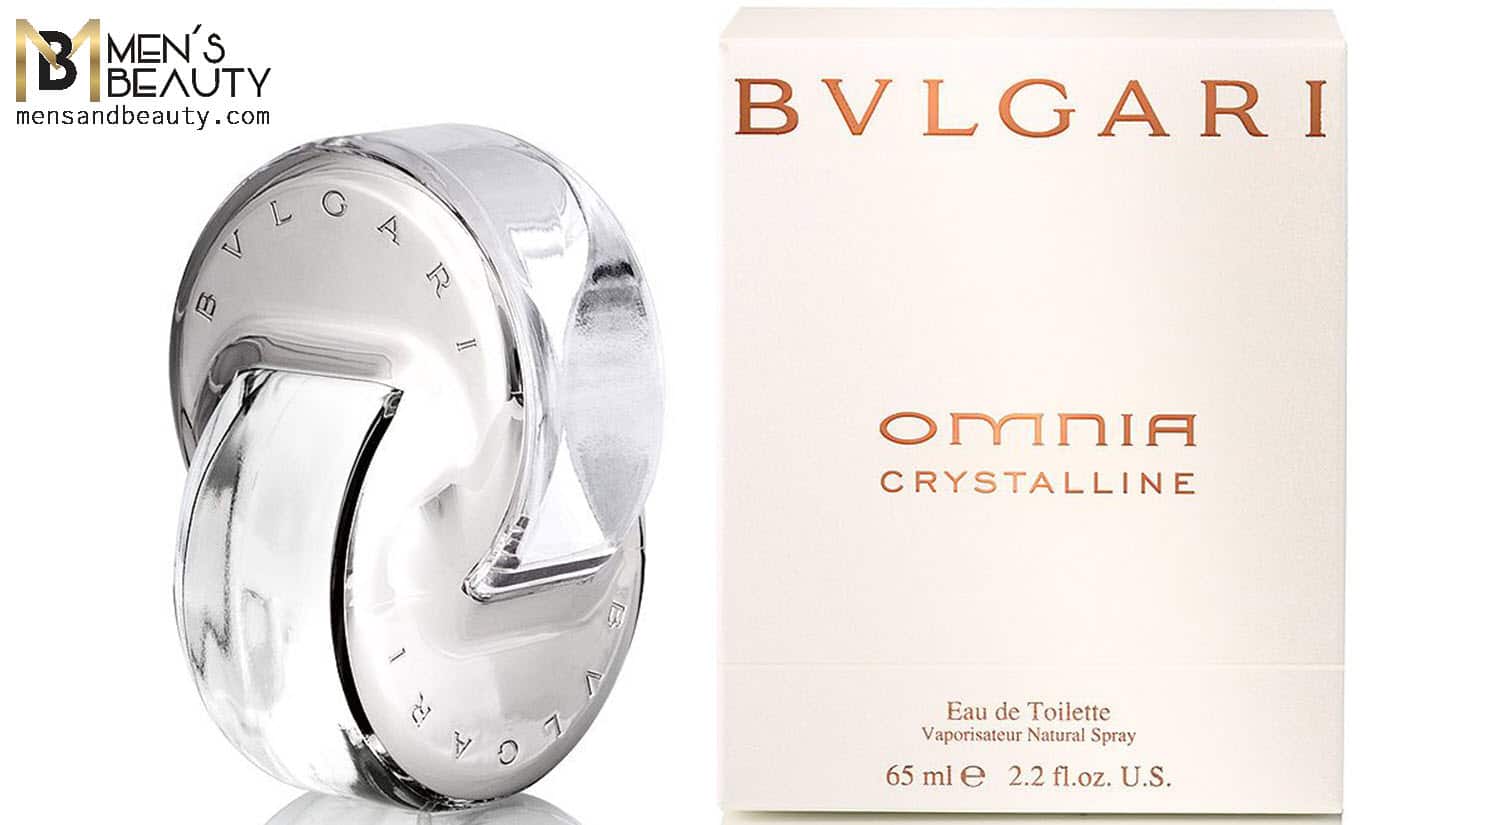 mejores perfumes mujer femeninos para ligar hombres omnia crystalline bvlgari